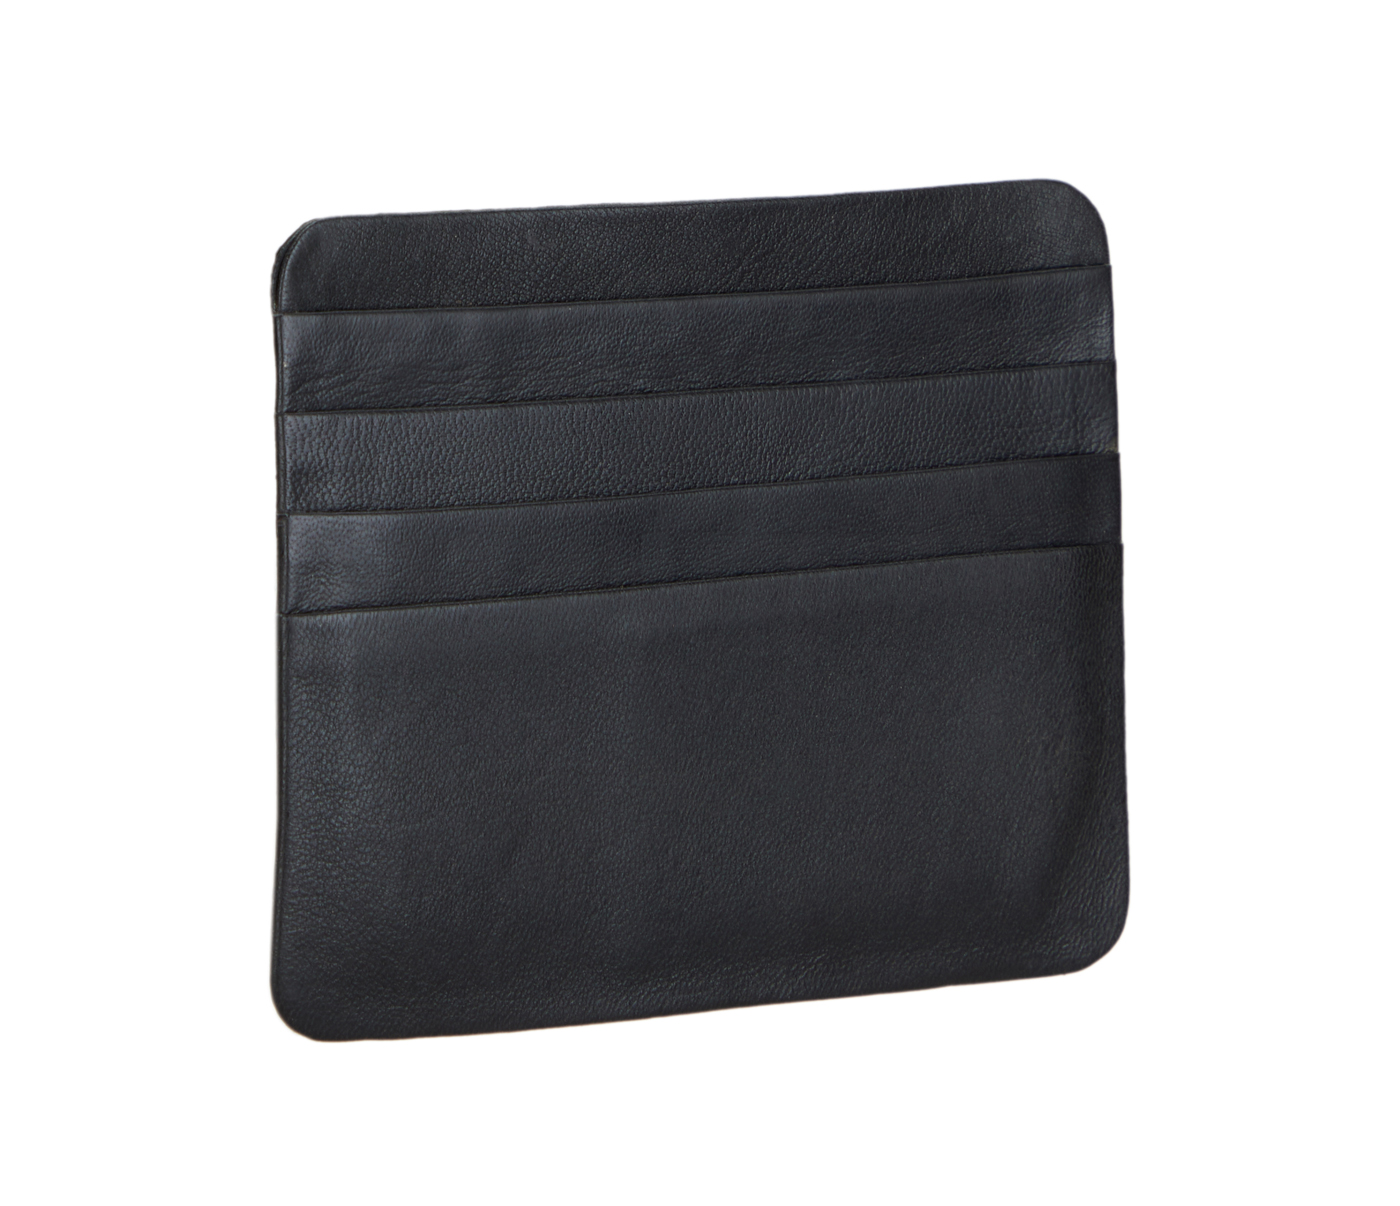 VW7--Ultra Slim Credit Card Case in Genuine Leather - Black